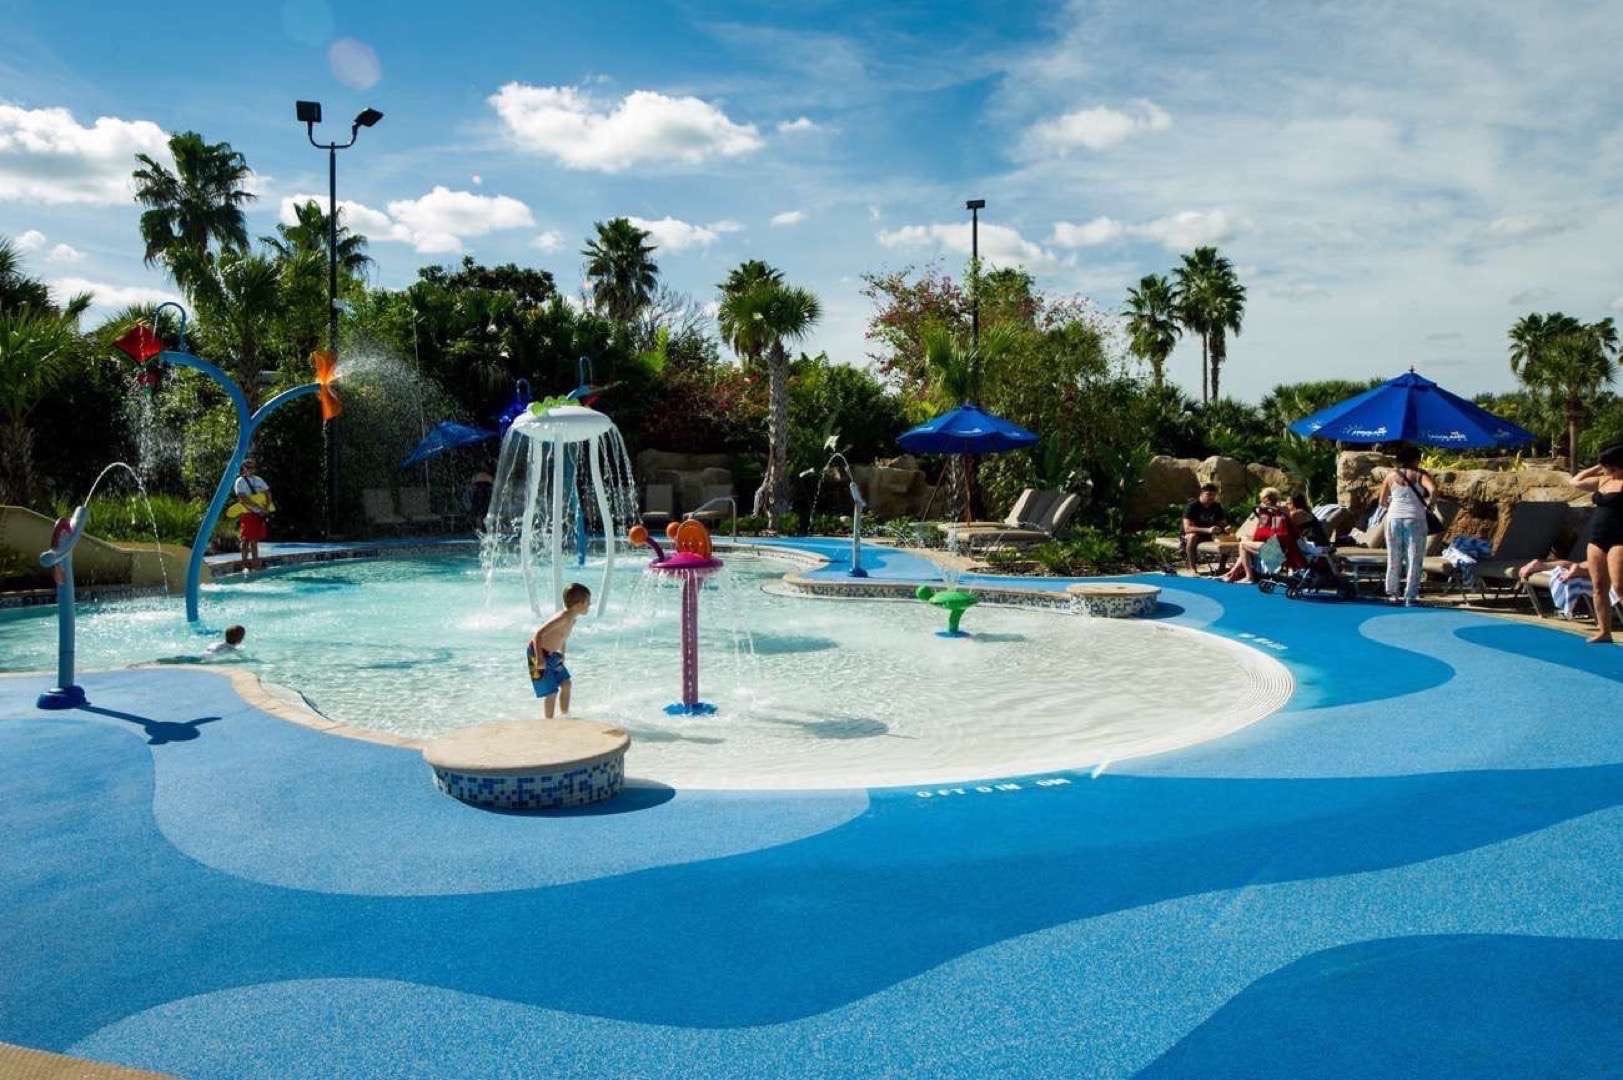 Orlando World Center Marriott View of the Marriott's Orlando World Center's water park for children.